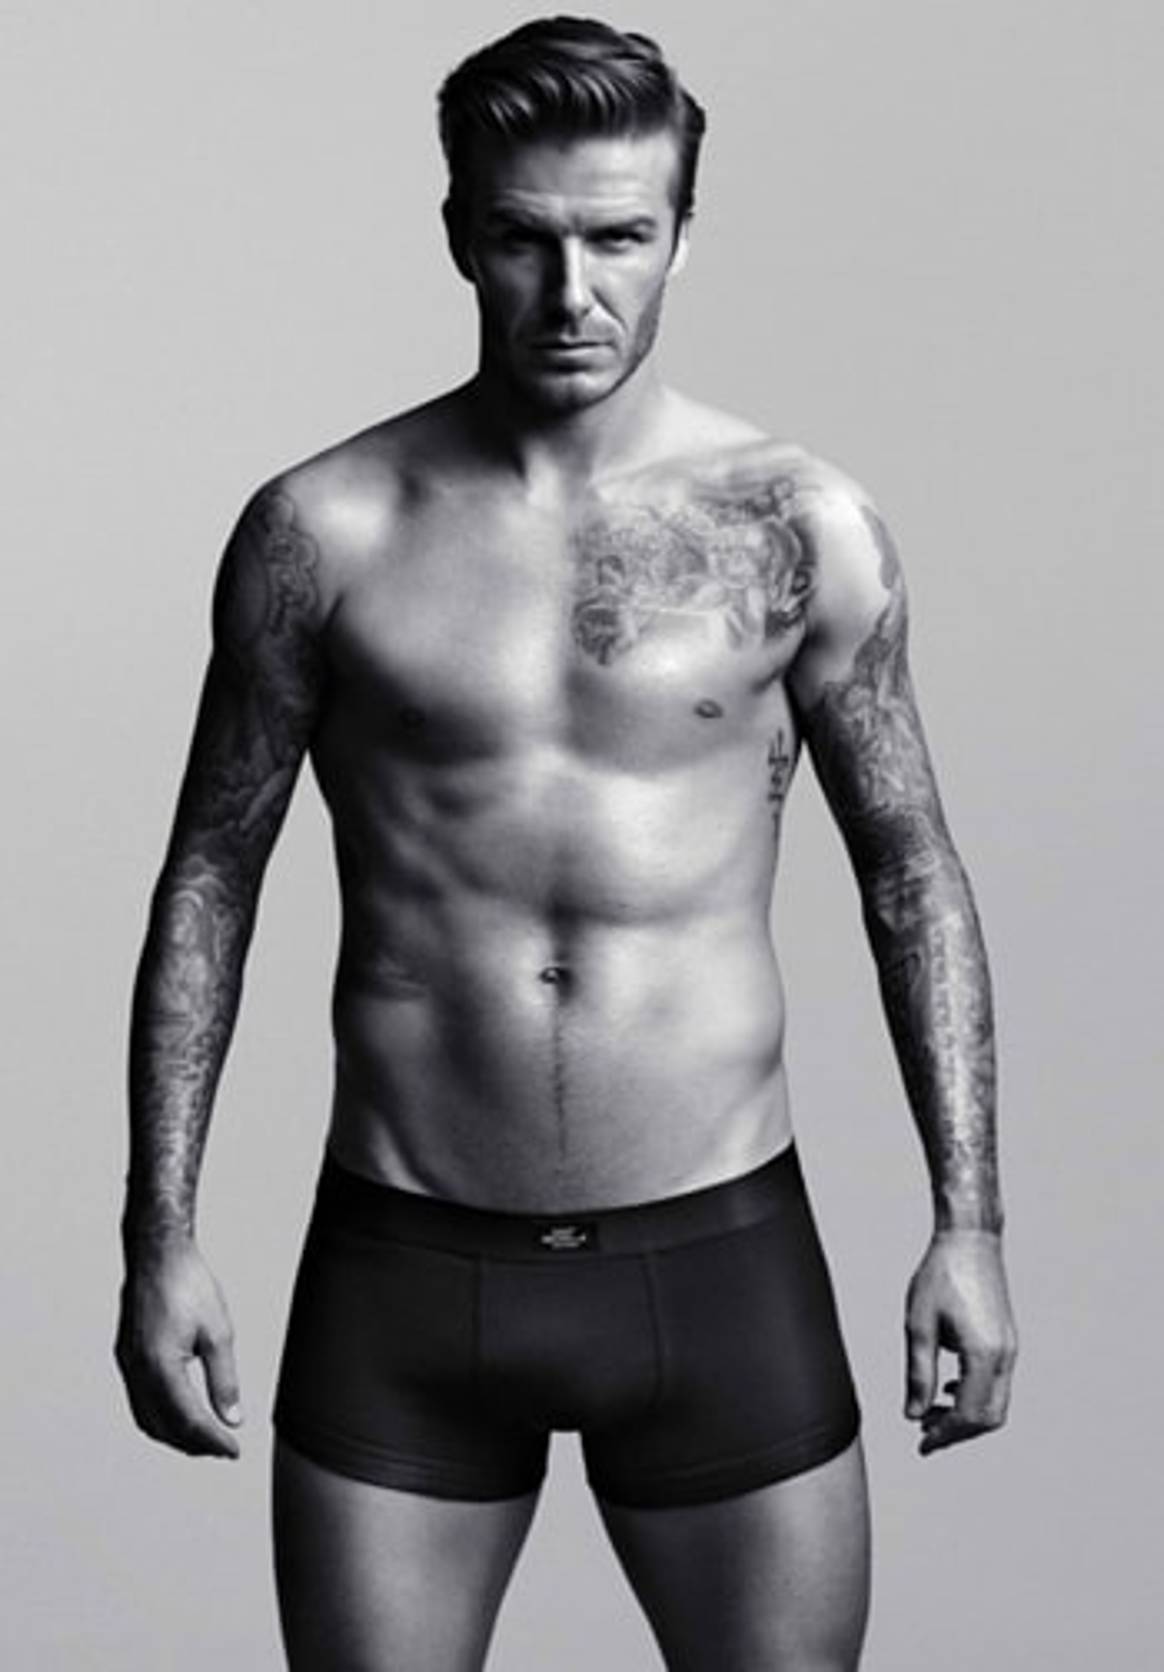 David Beckham pants ad received complaints